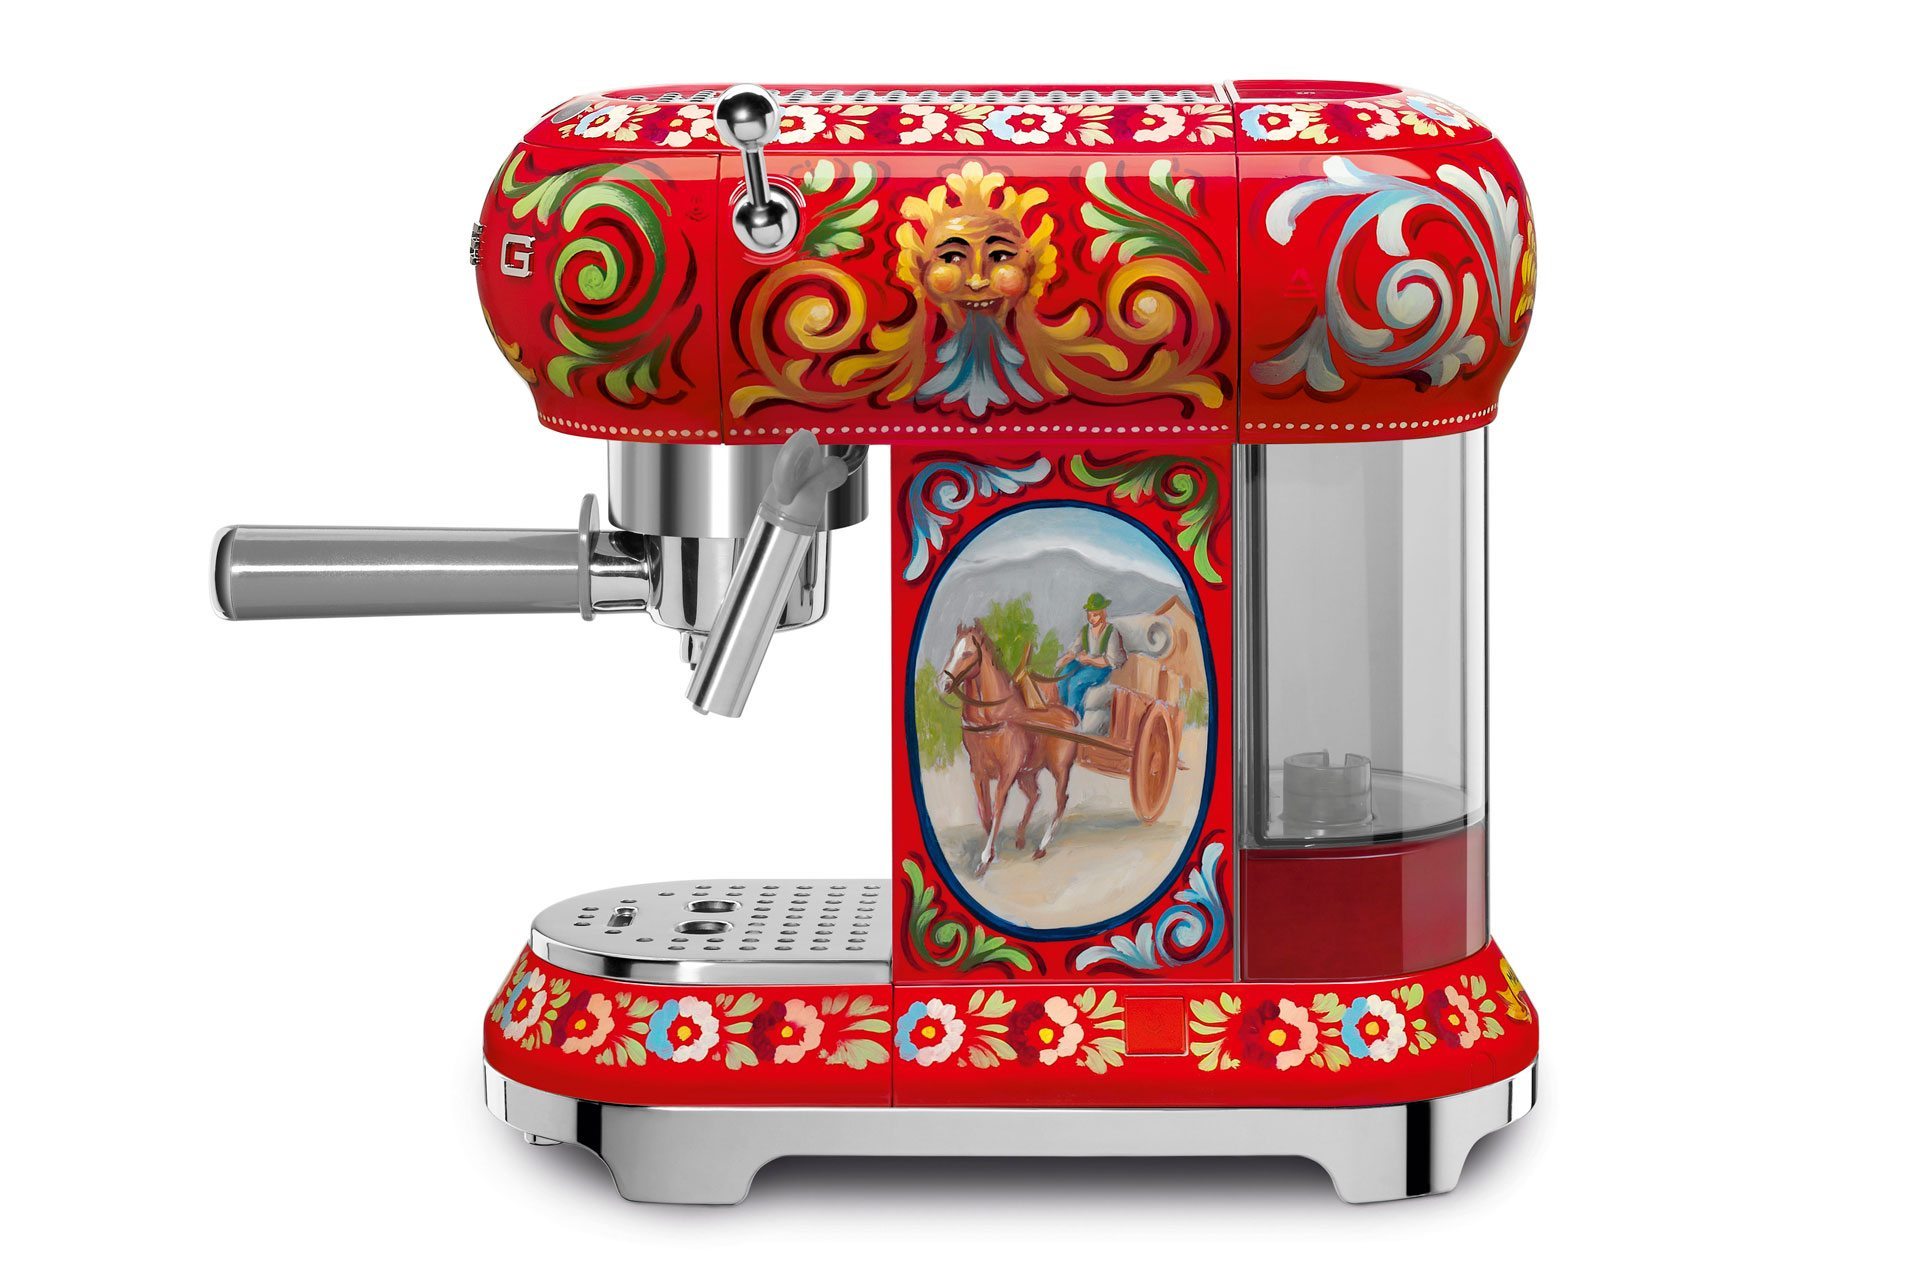 Dolce & Gabbana X Smeg Appliances 2018: Toaster, Juicer, Coffee Maker